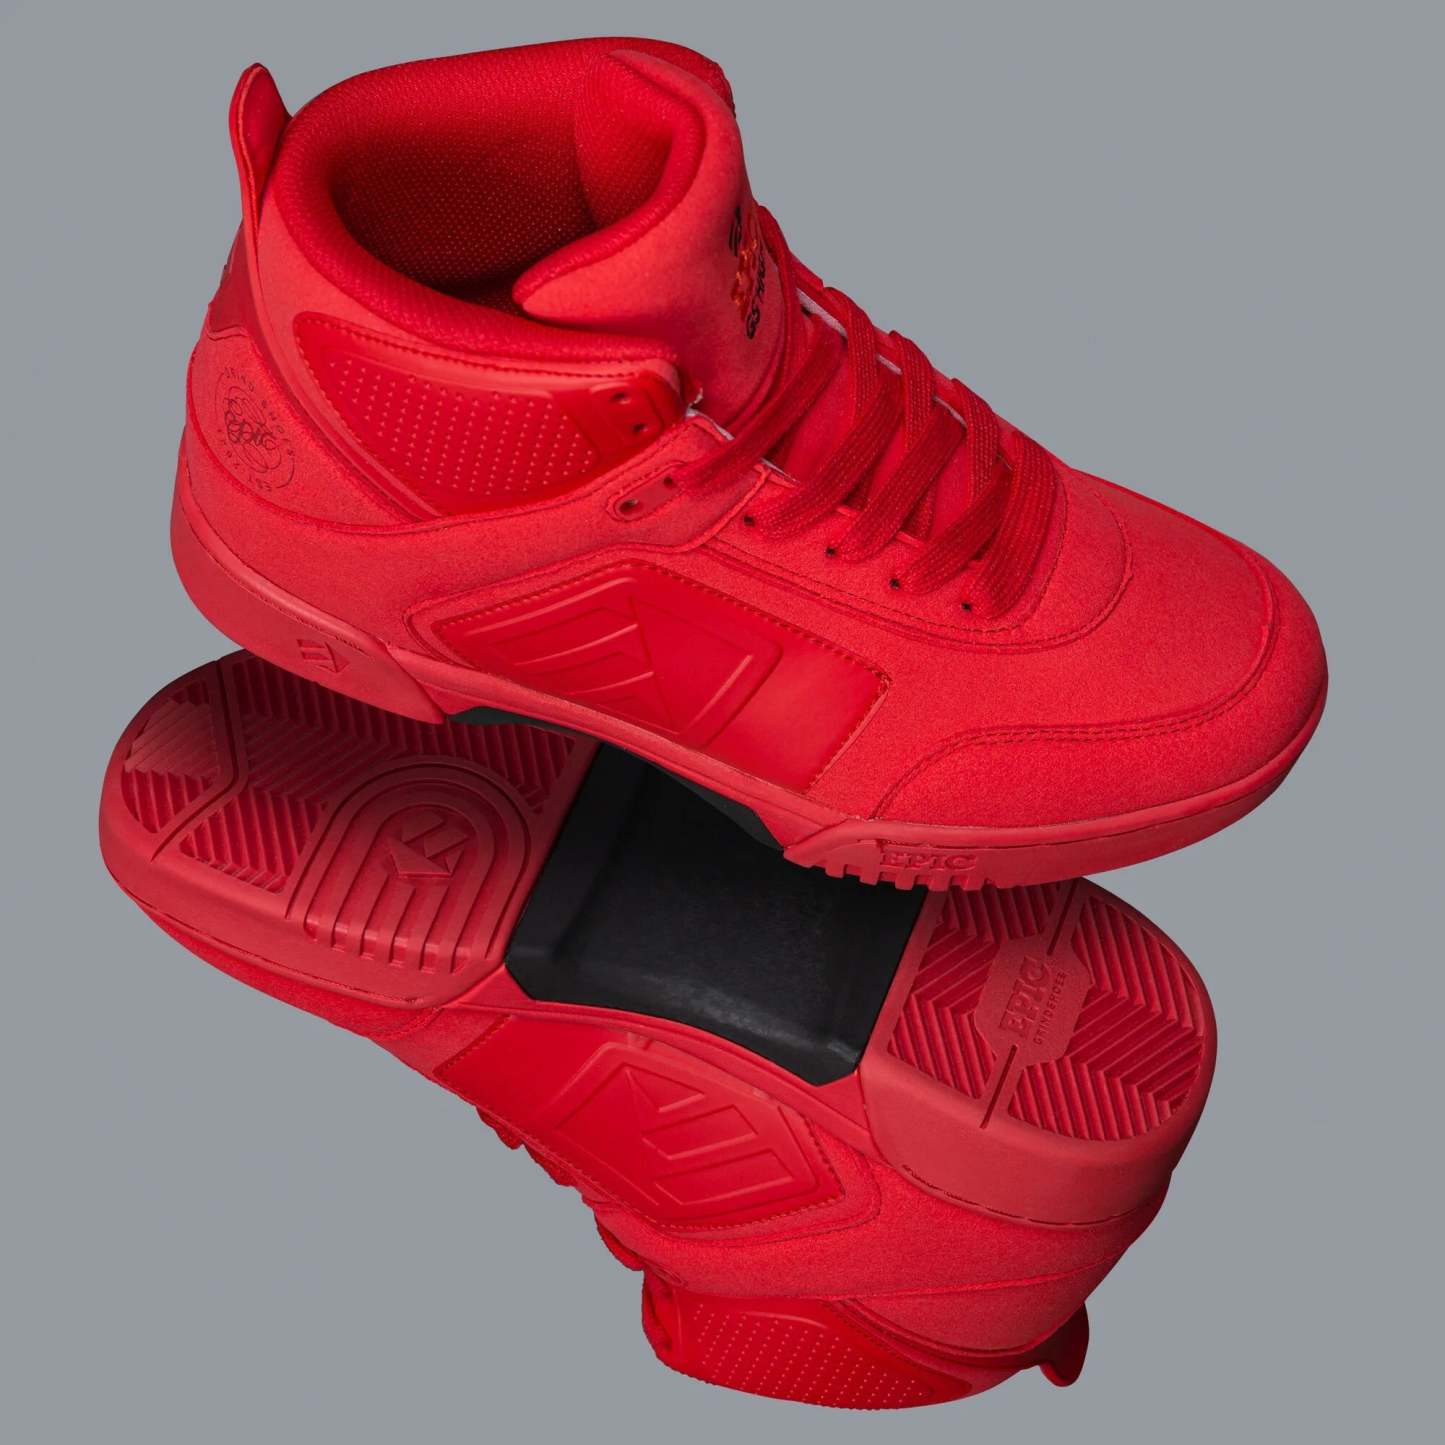 EPIC - Stomper (Red Lava) Grind Shoes